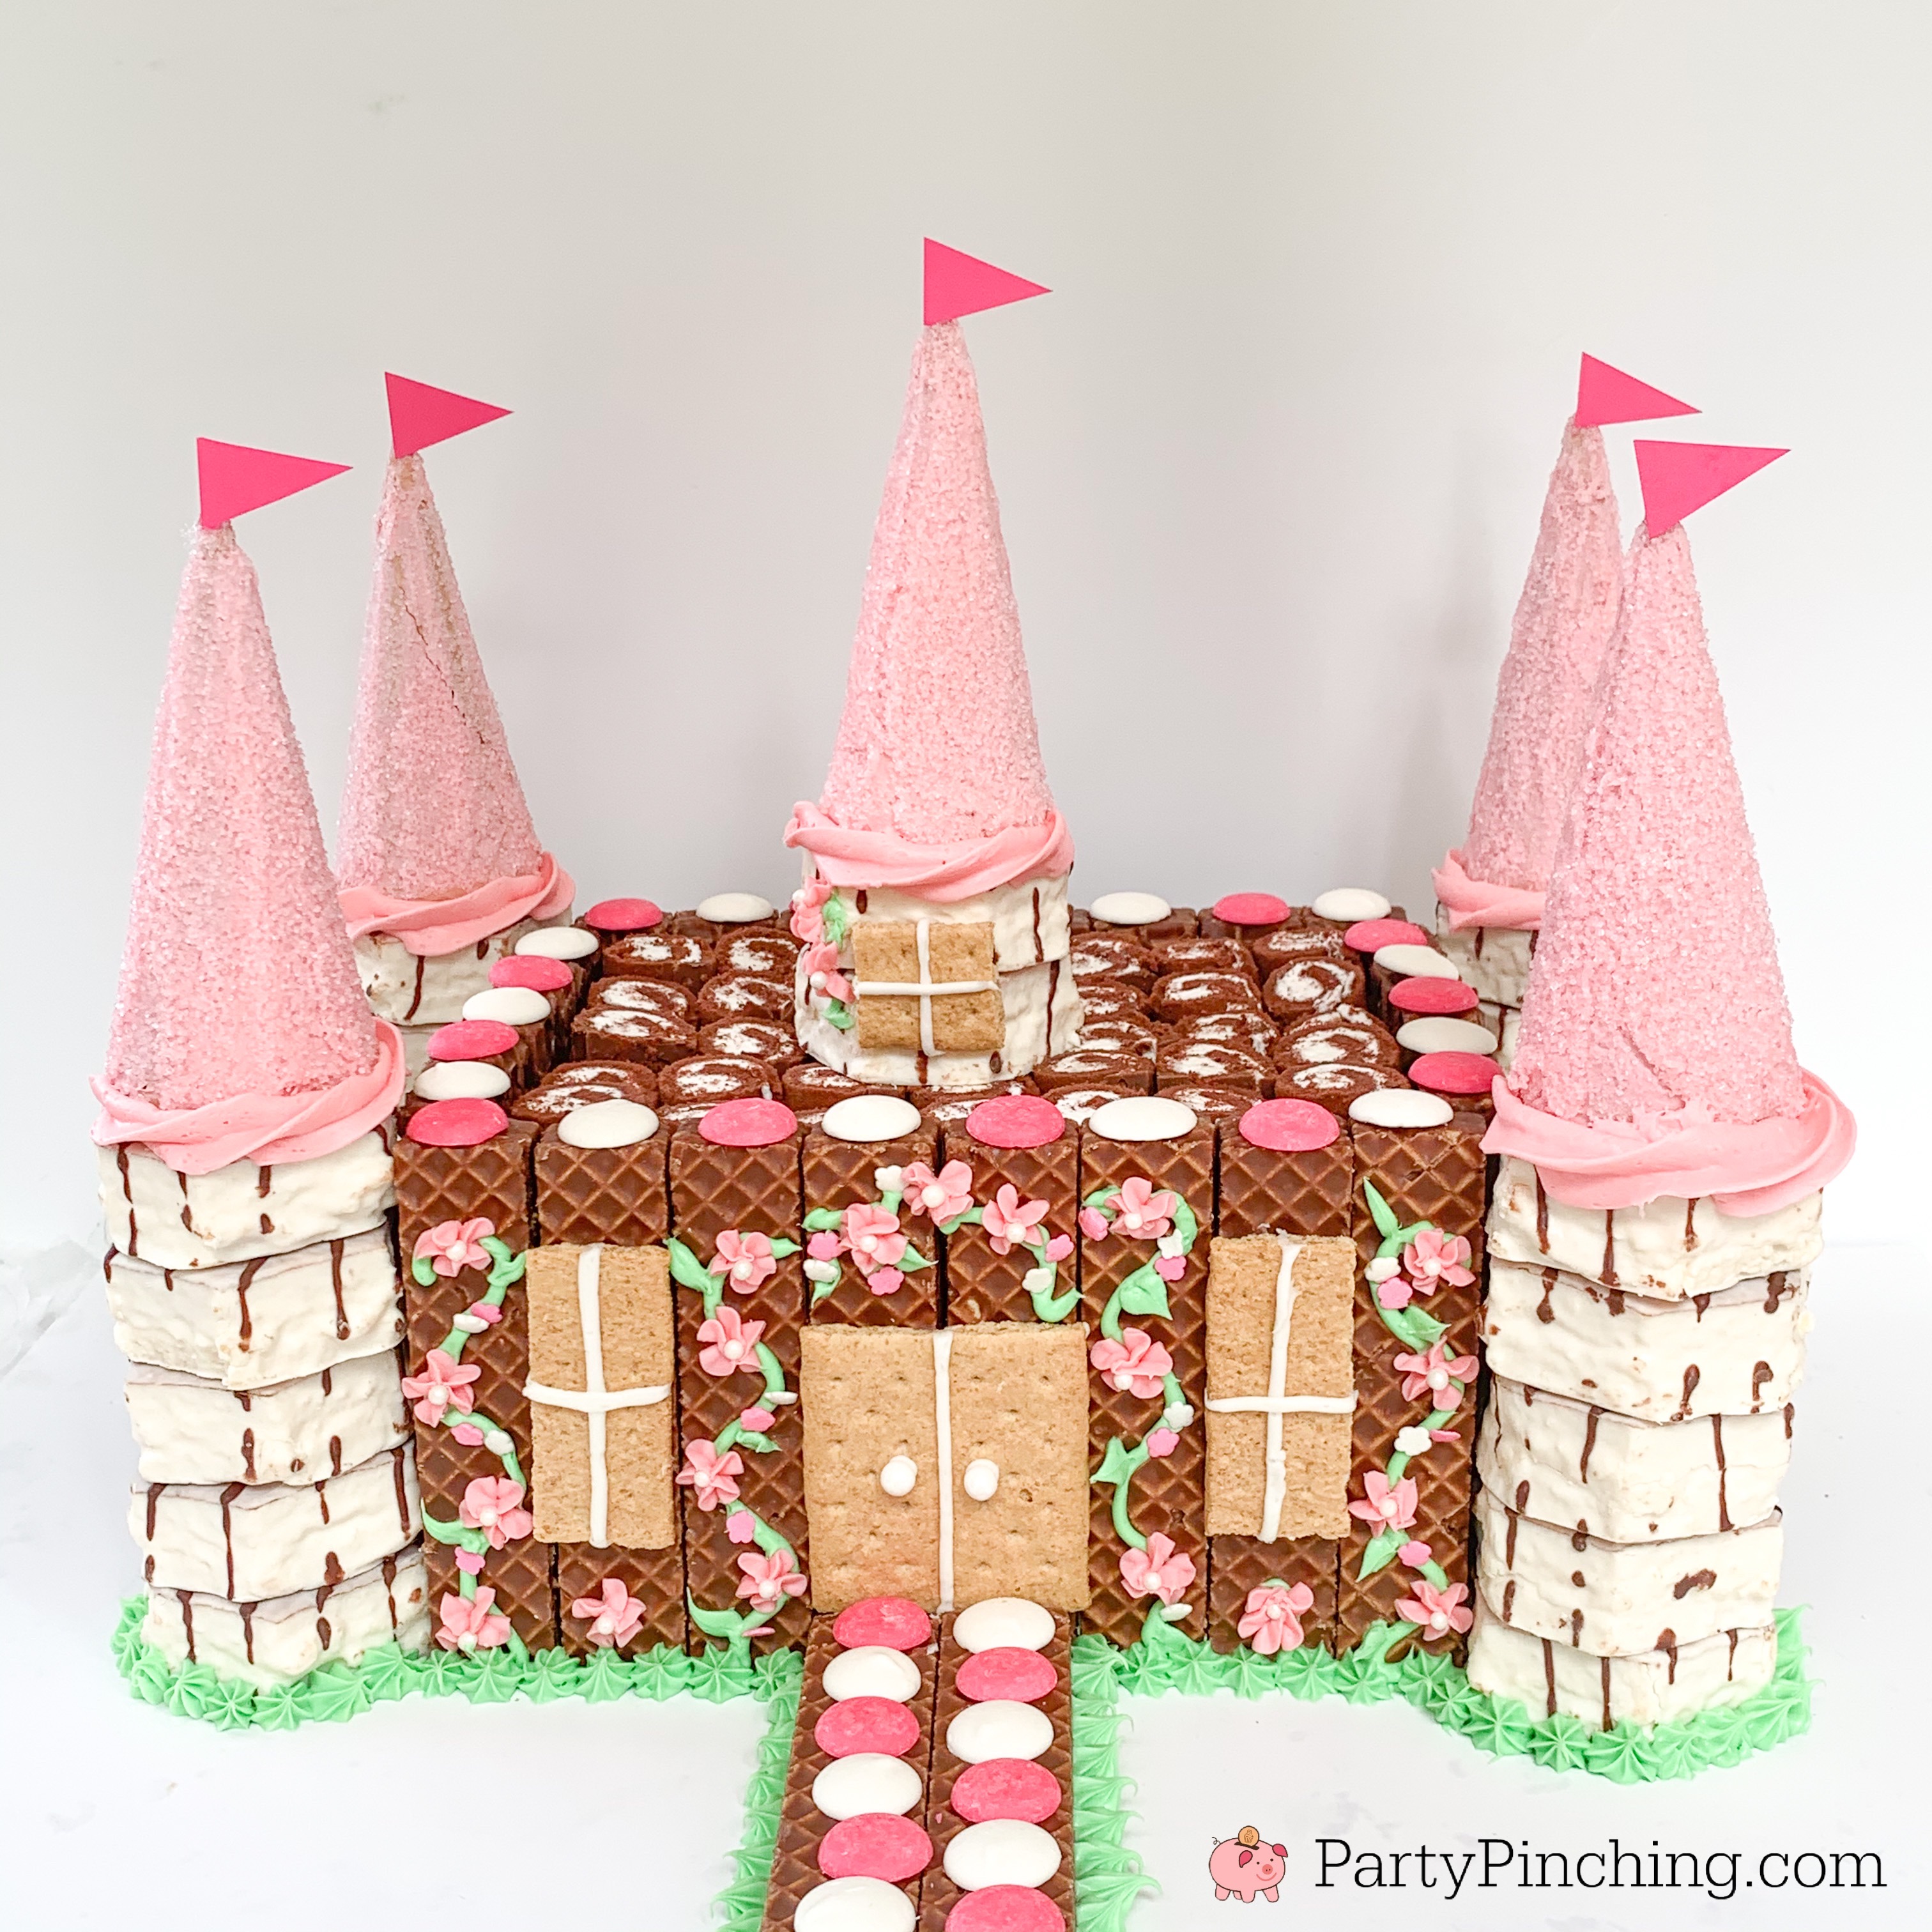 The Castle Cake - Jessica Harris Cake Design